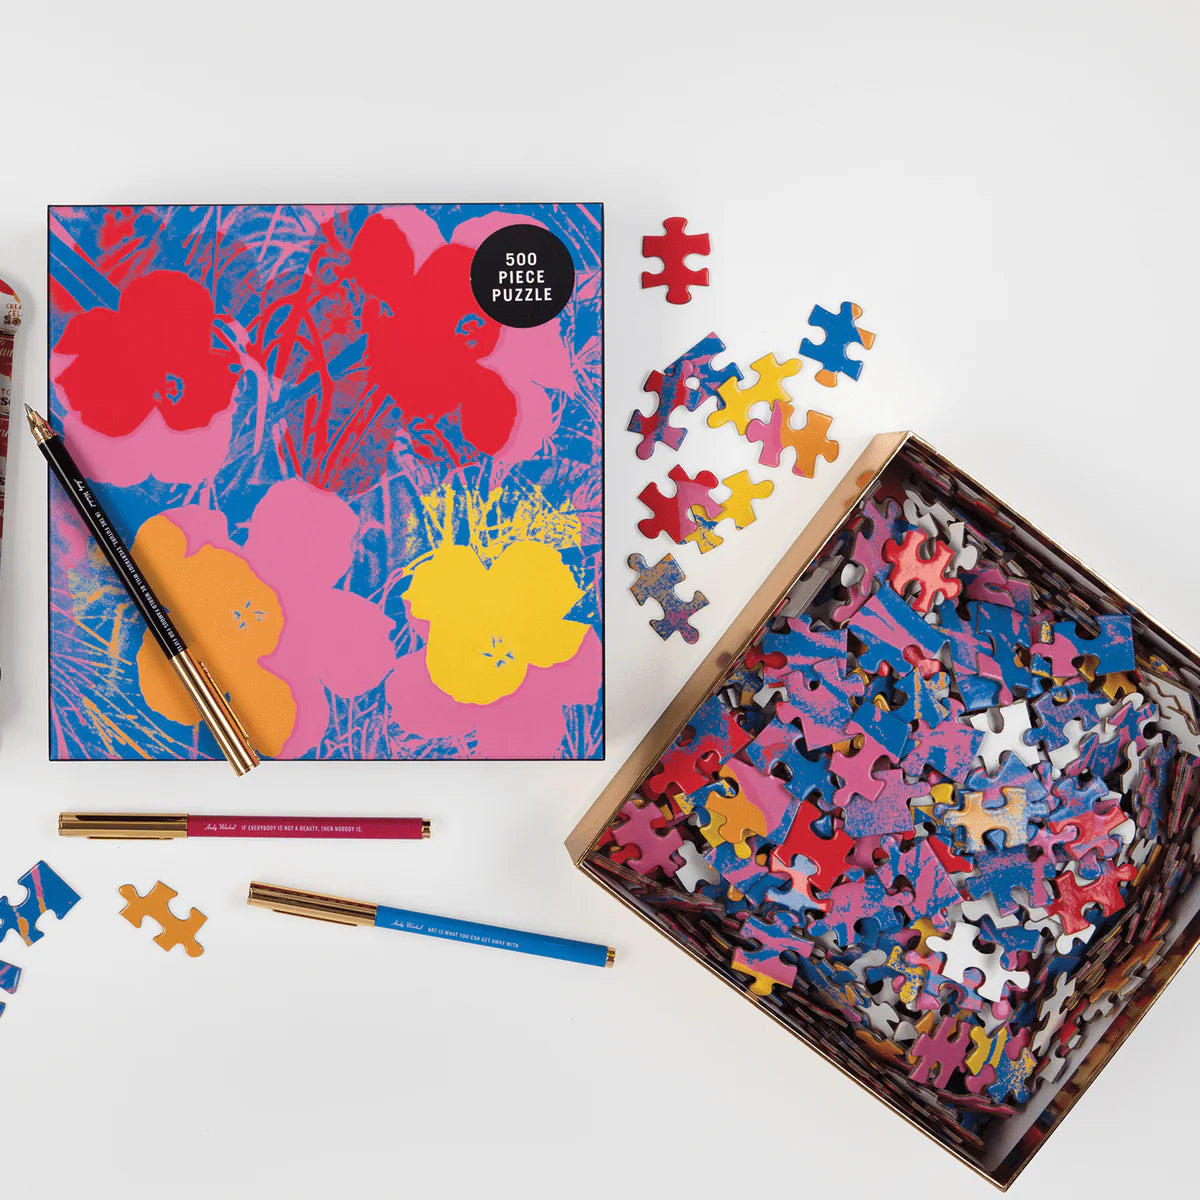 Andy Warhol: 500 Piece Puzzle